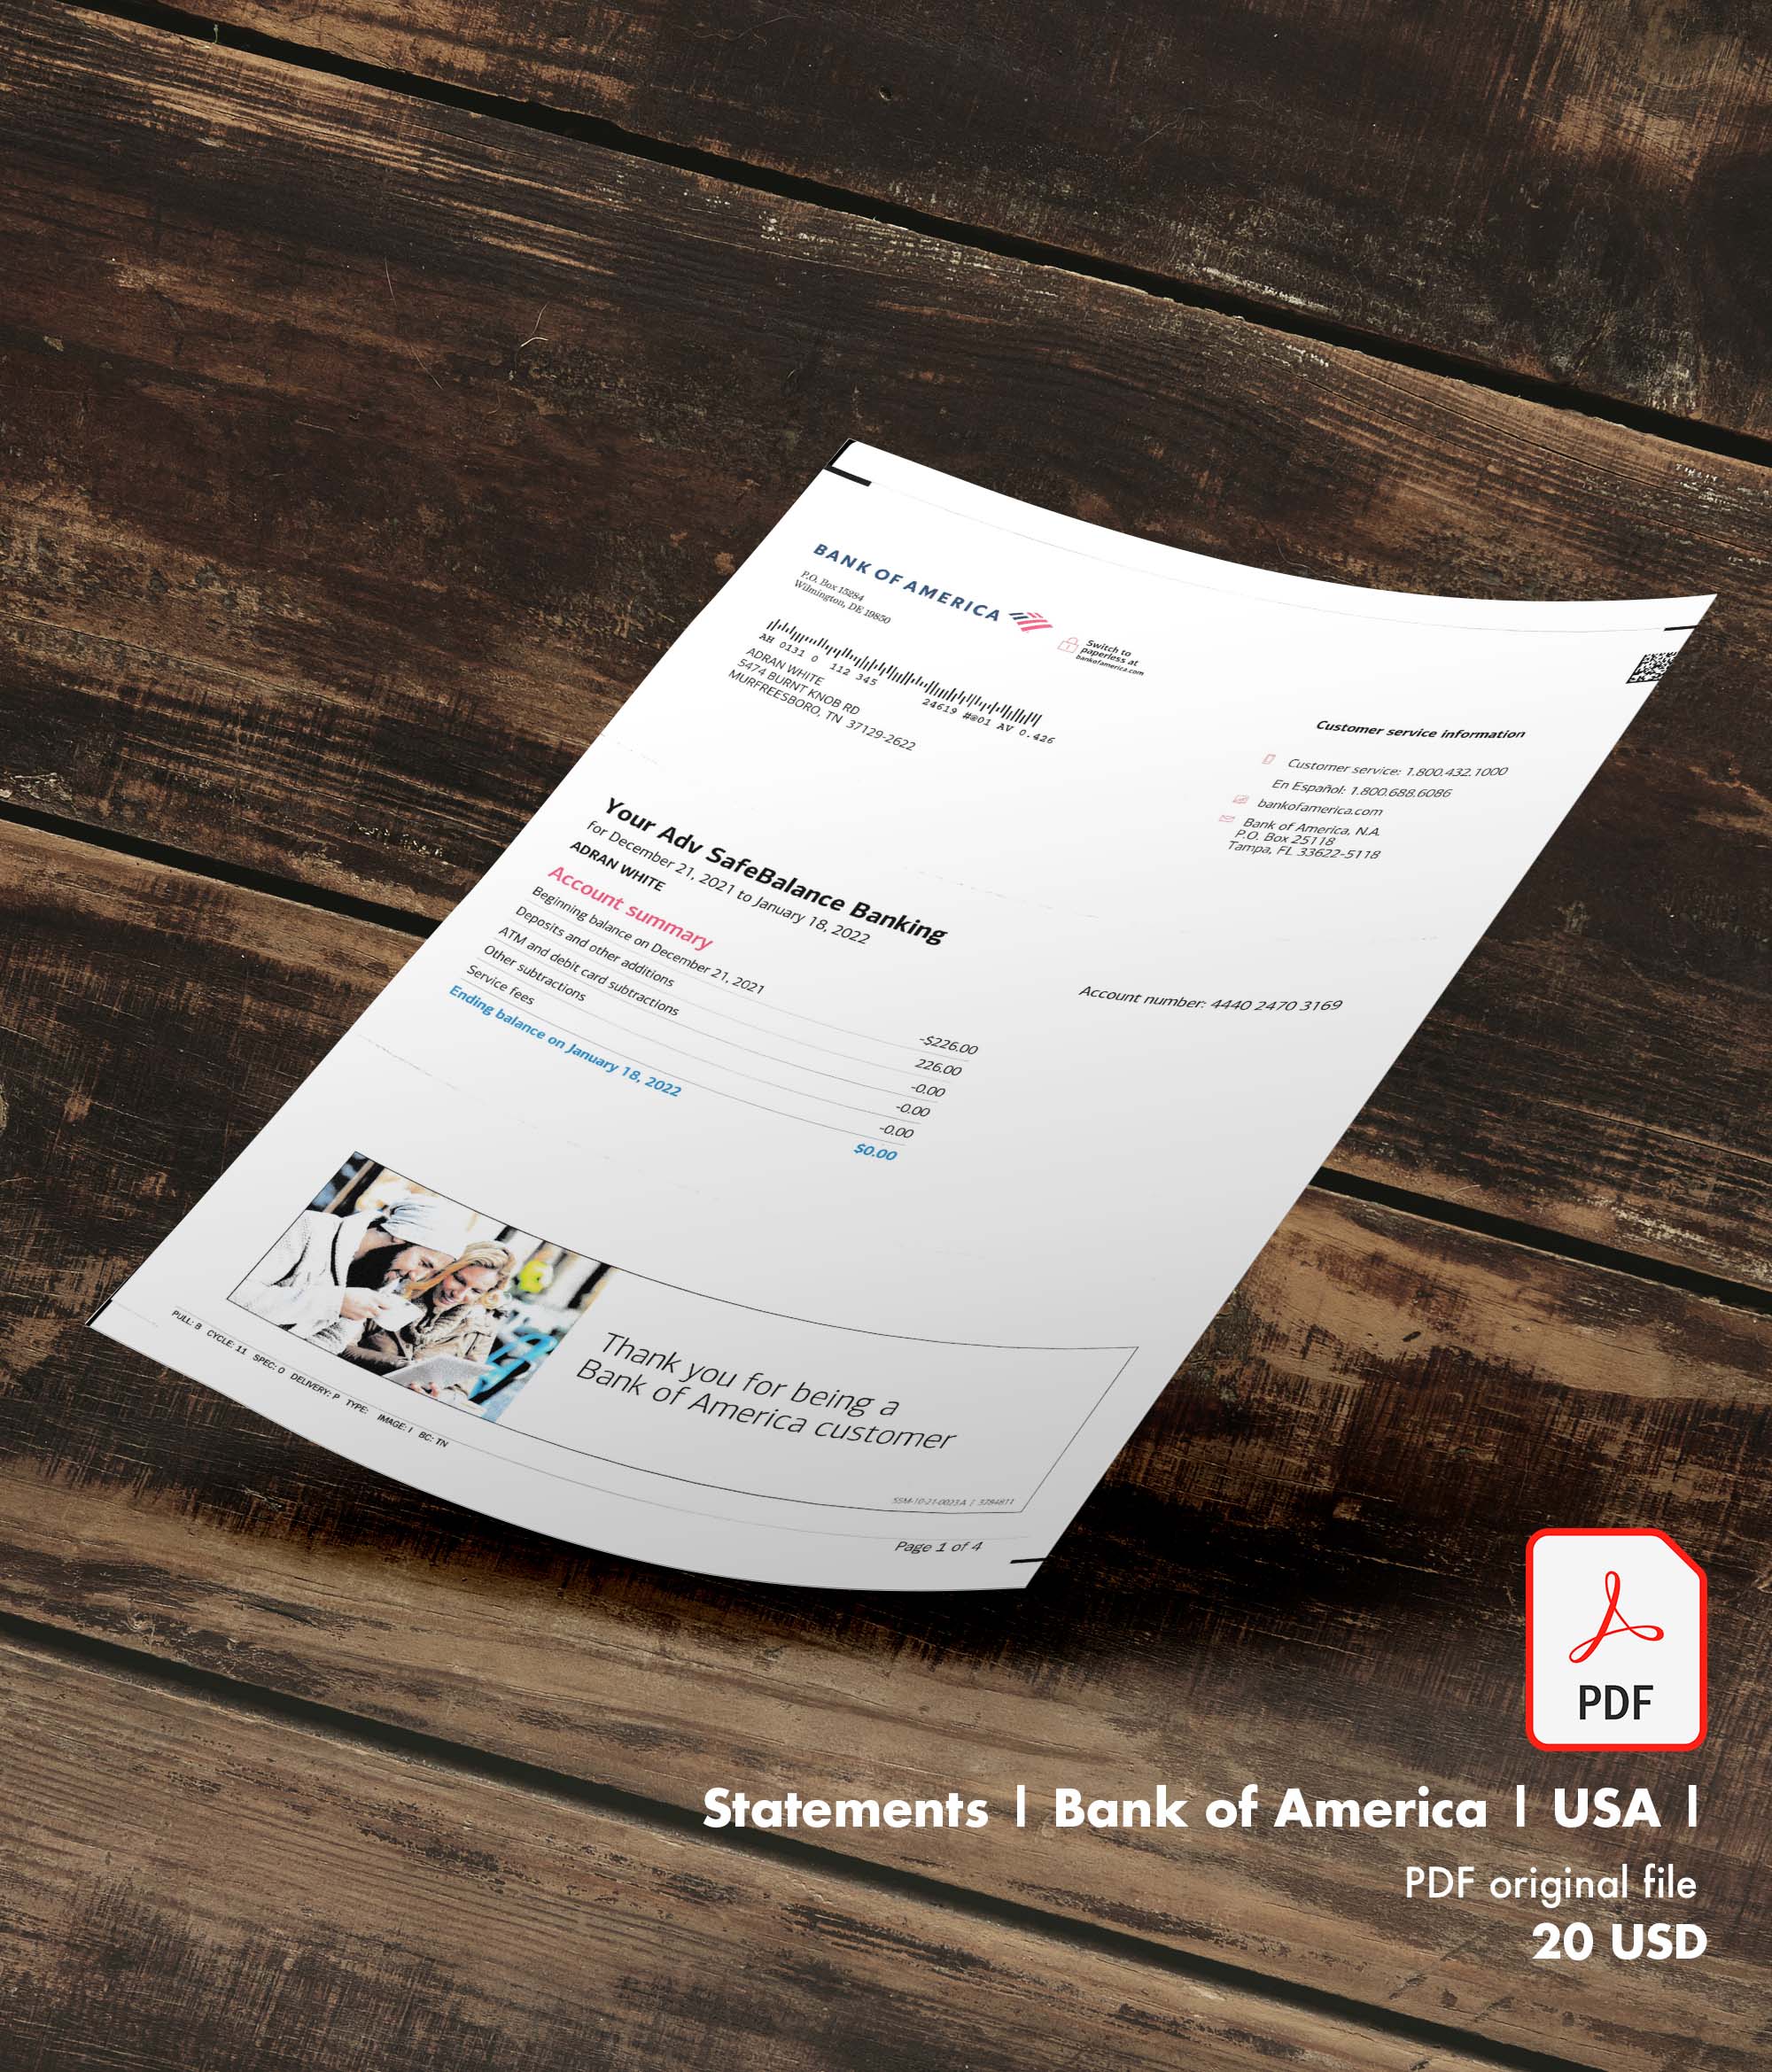 Statement | Bank of America | USA |-0